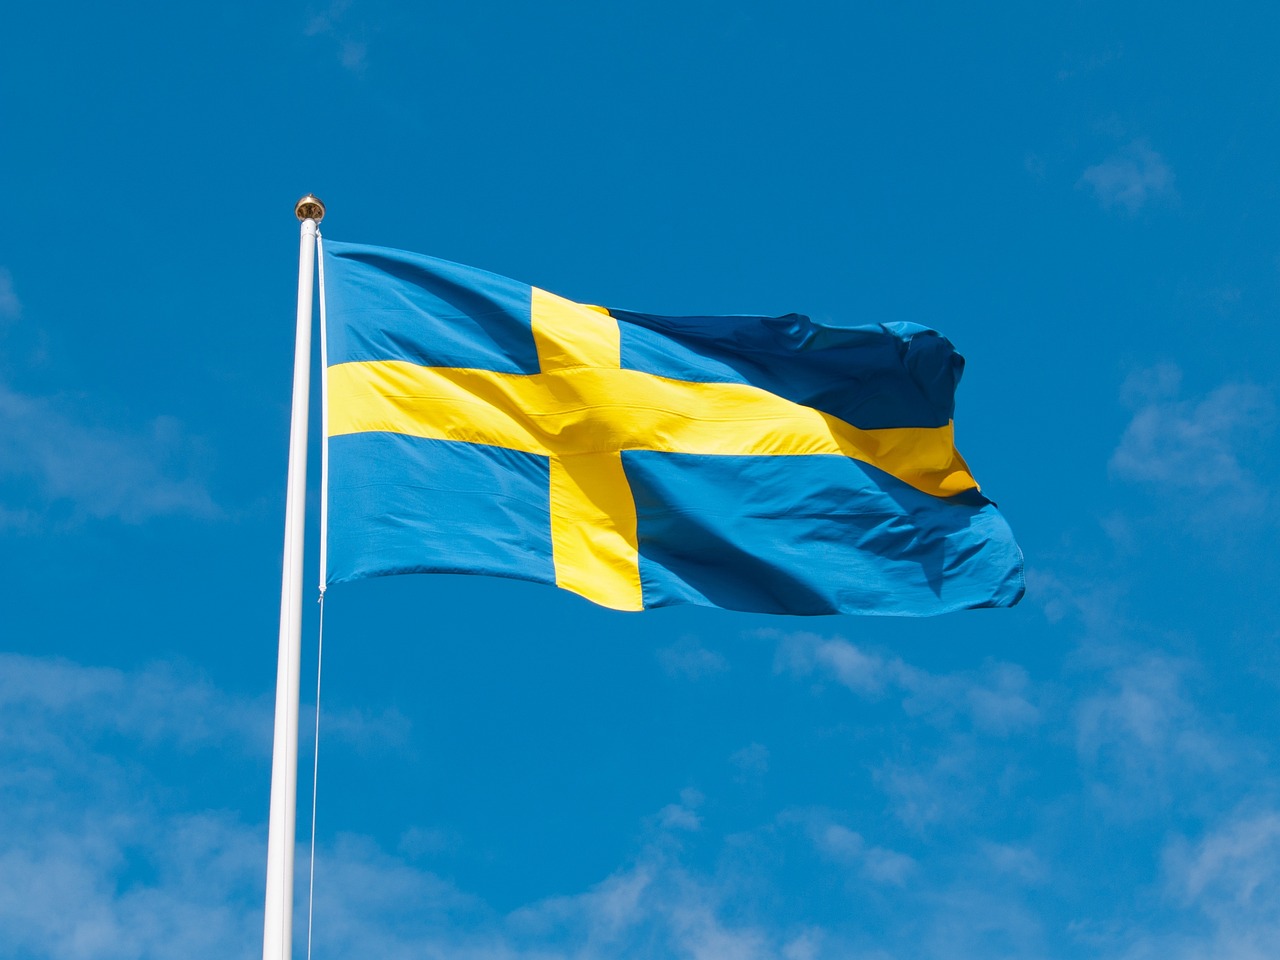 Švédskeho demokratického zákonodarcu napadli traja muži